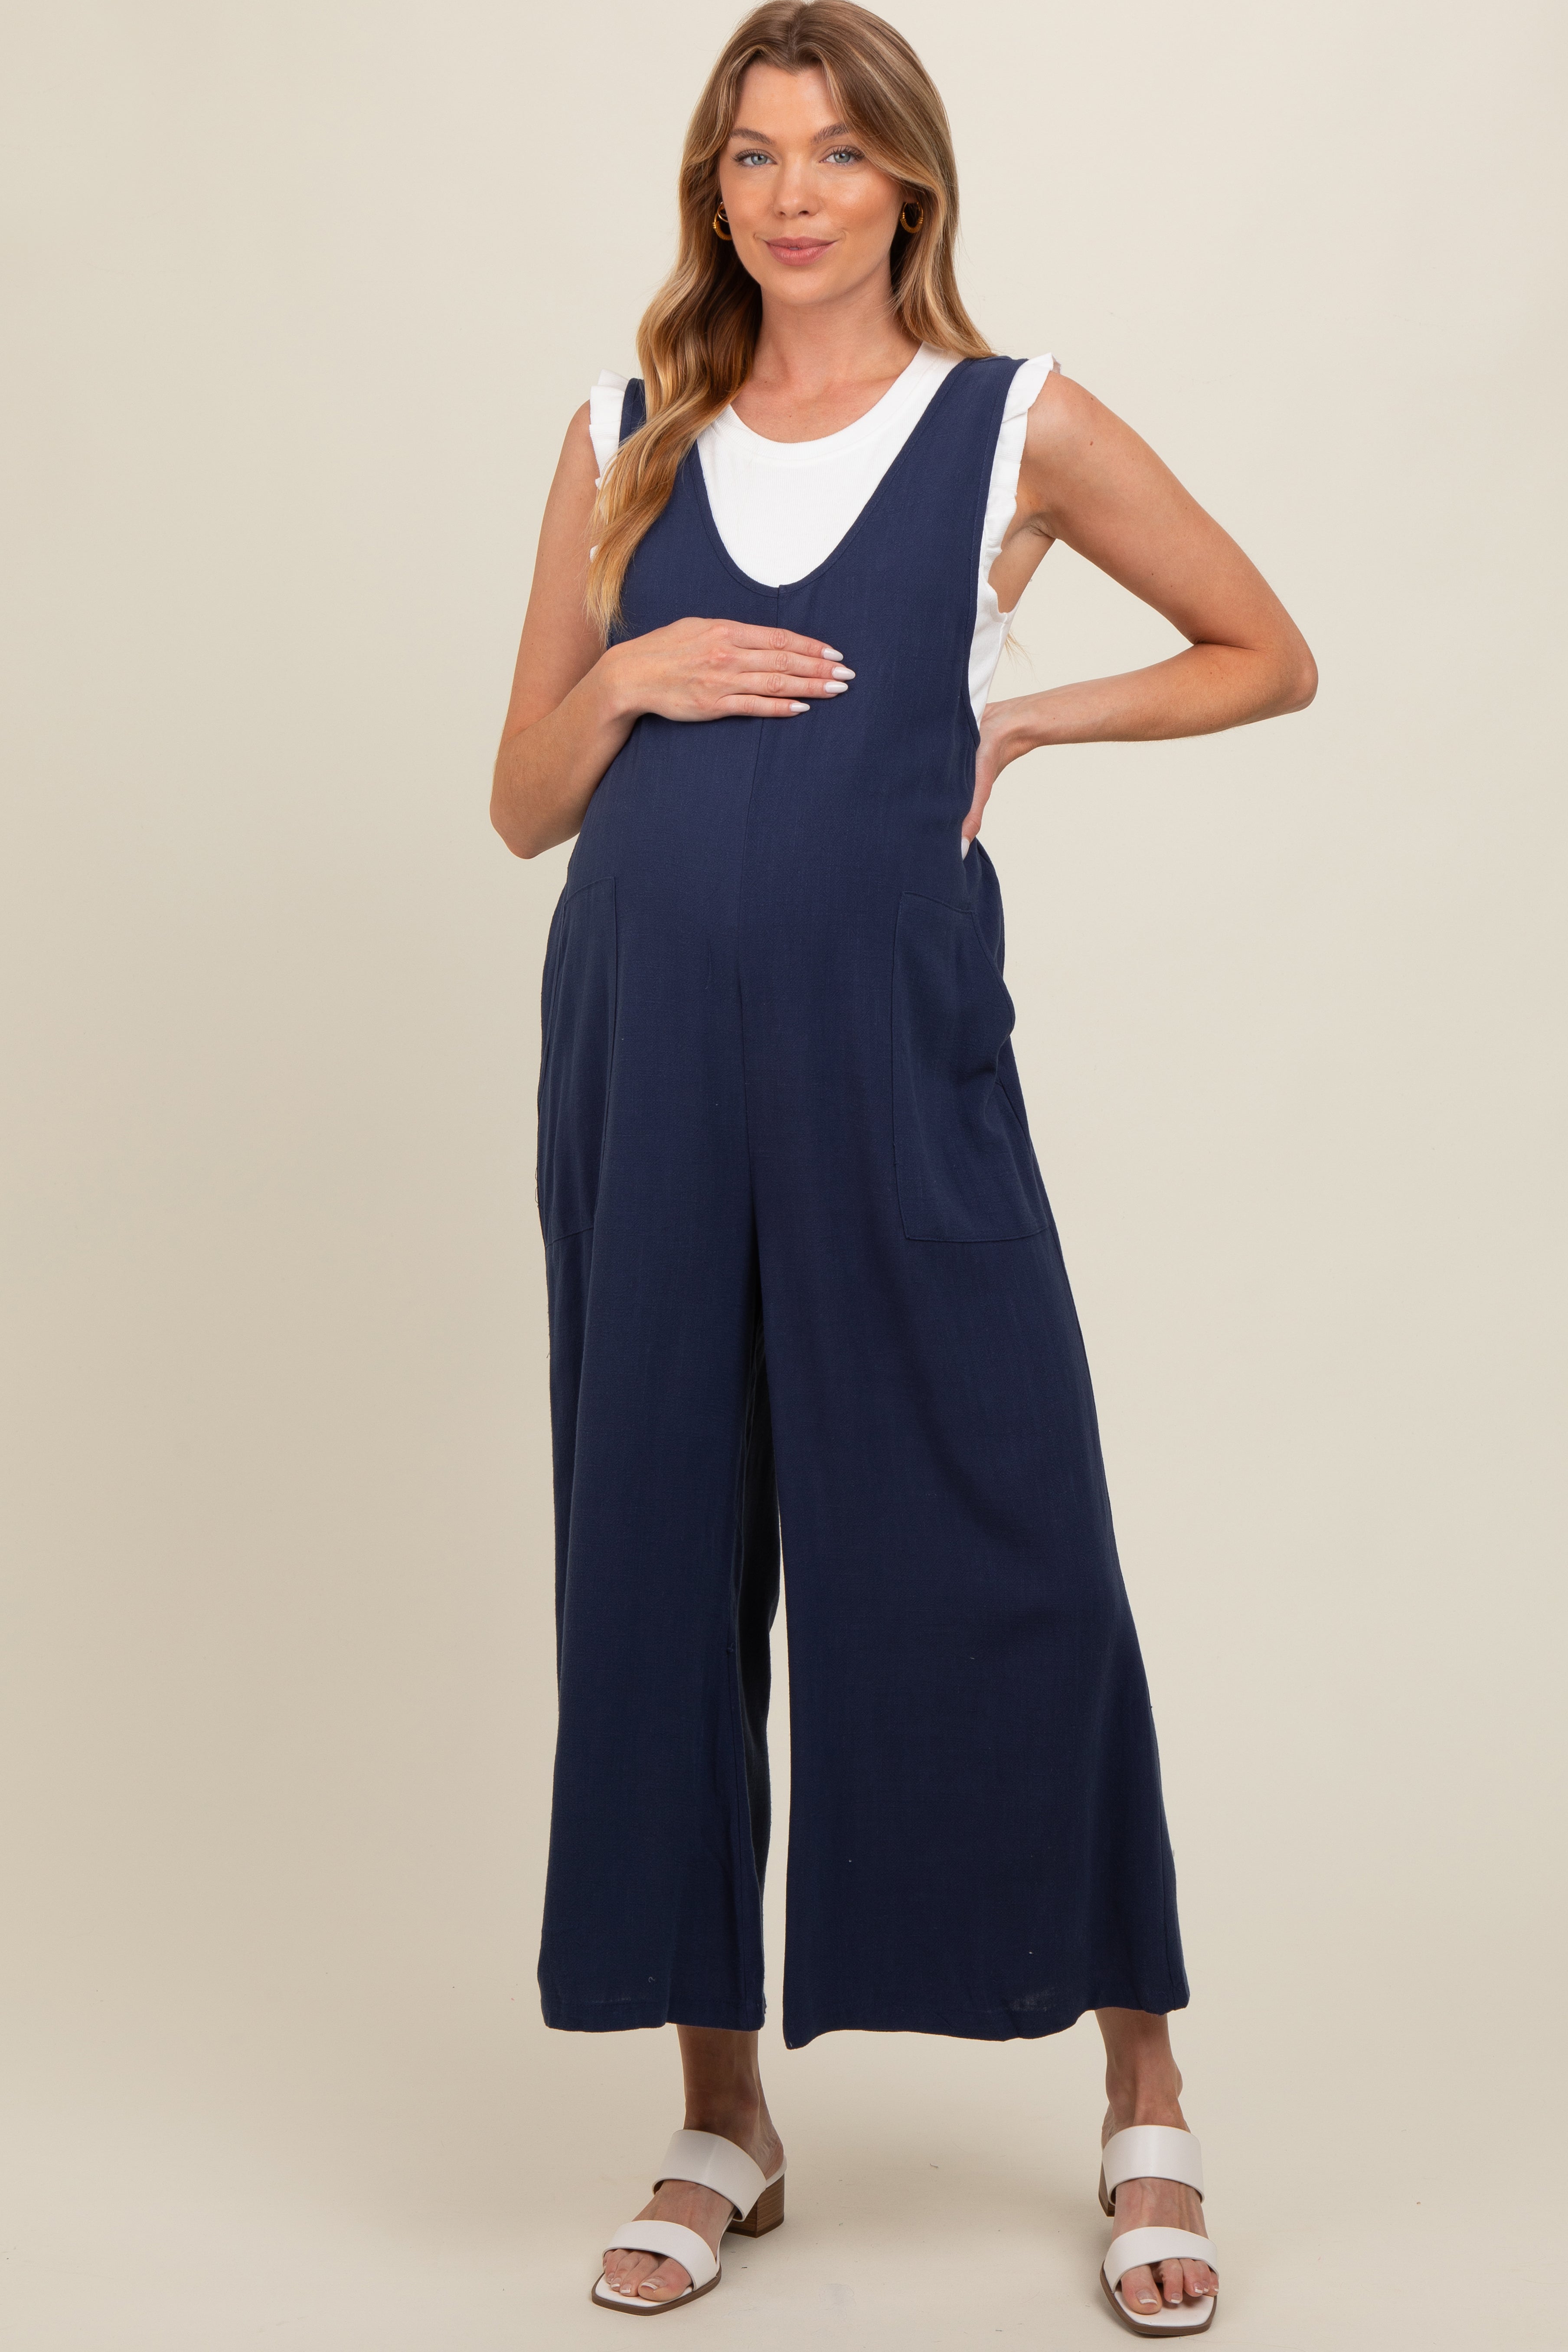 Image of Navy Blue V-Neck Wide Leg Maternity Jumpsuit